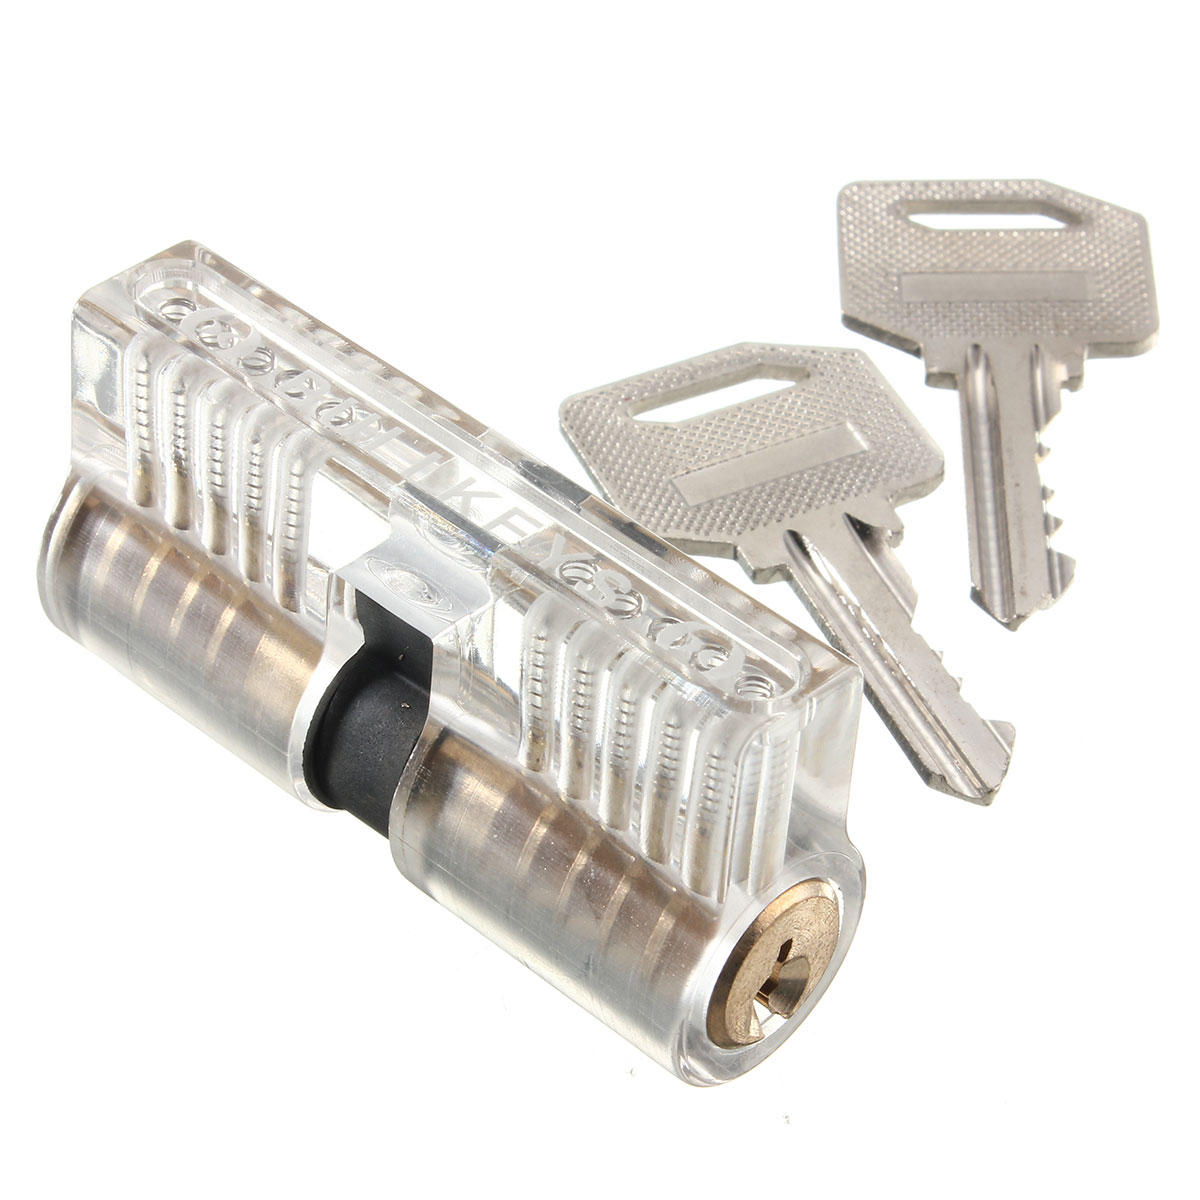 Pick Inside Padlock Transparent Lock Lock Picks Tools for Locksmith Practice Training Key Copper